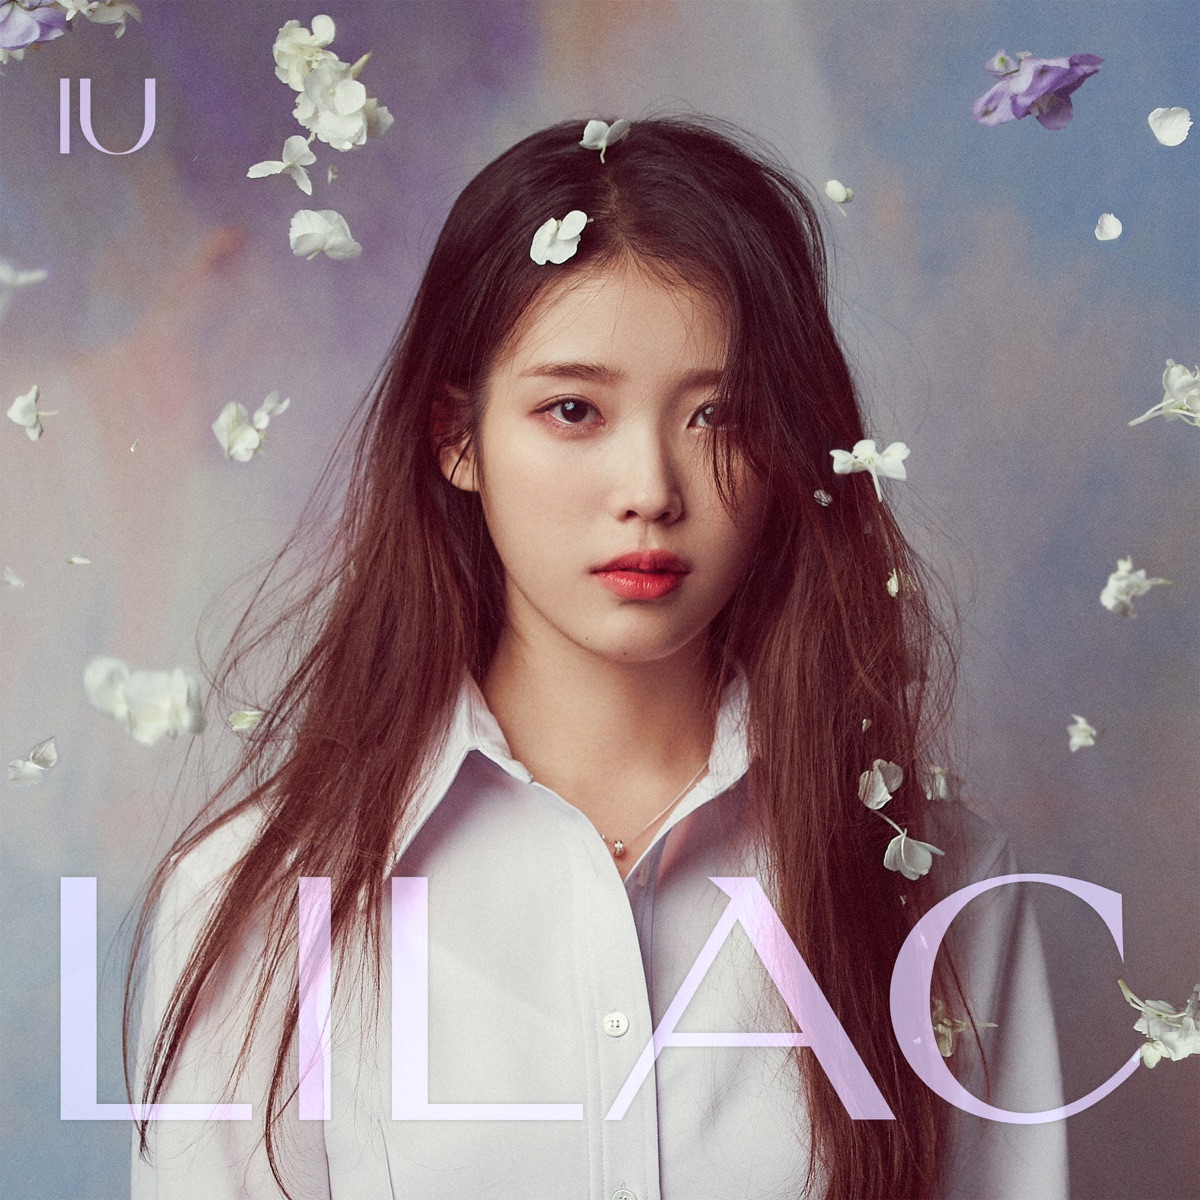 『IU - Troll (feat. DEAN) 歌詞』収録の『IU 5th Album 'Lilac'』ジャケット